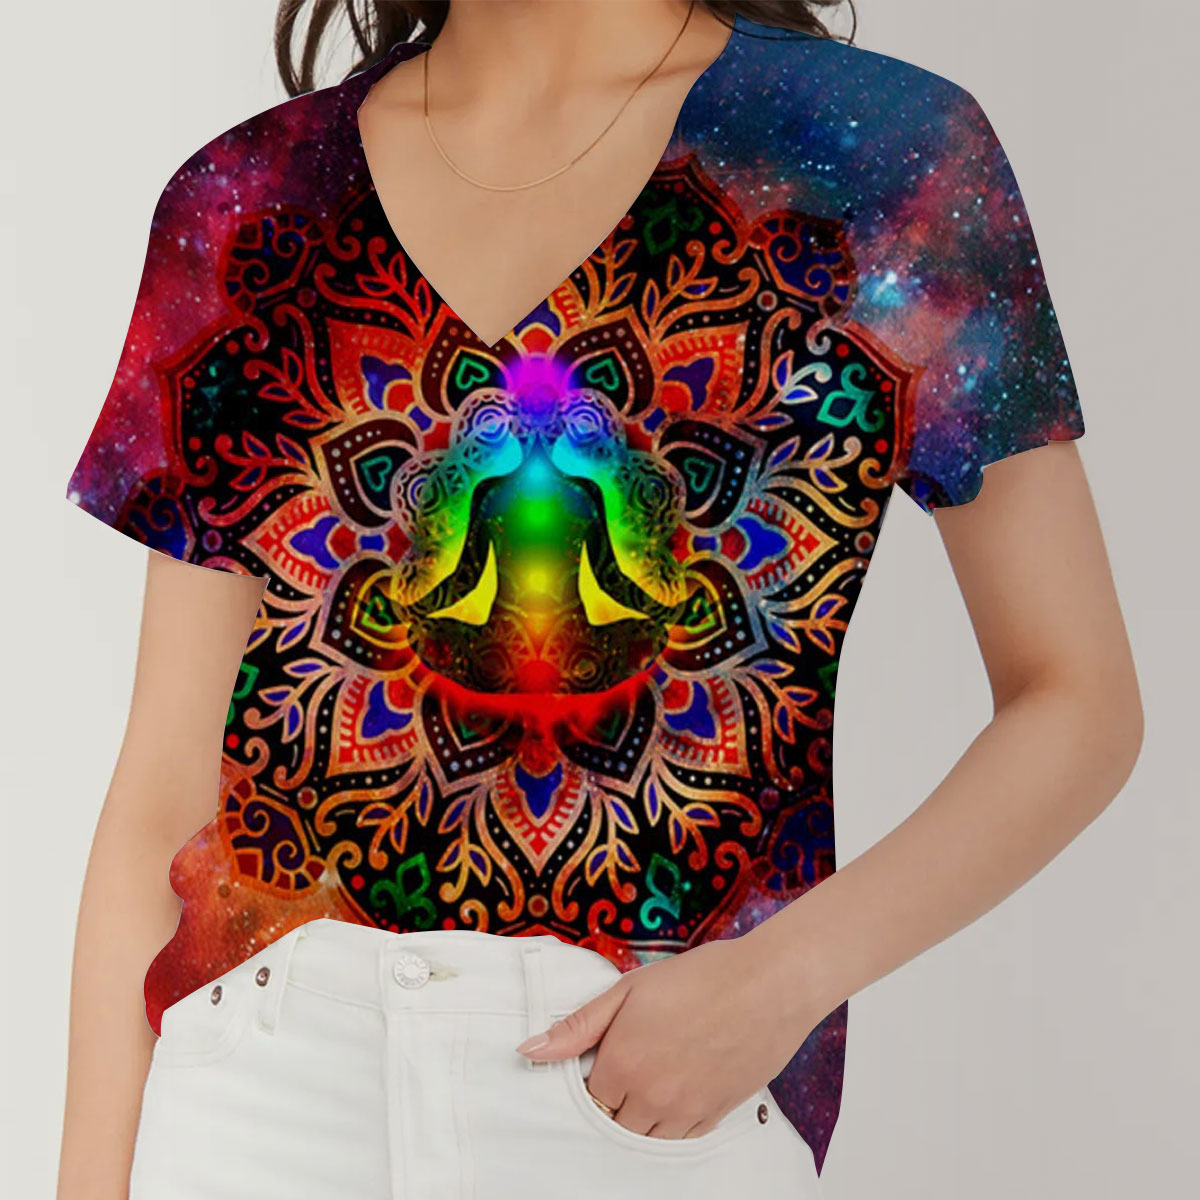 Starry Night Galaxy V-Neck Women's T-Shirt